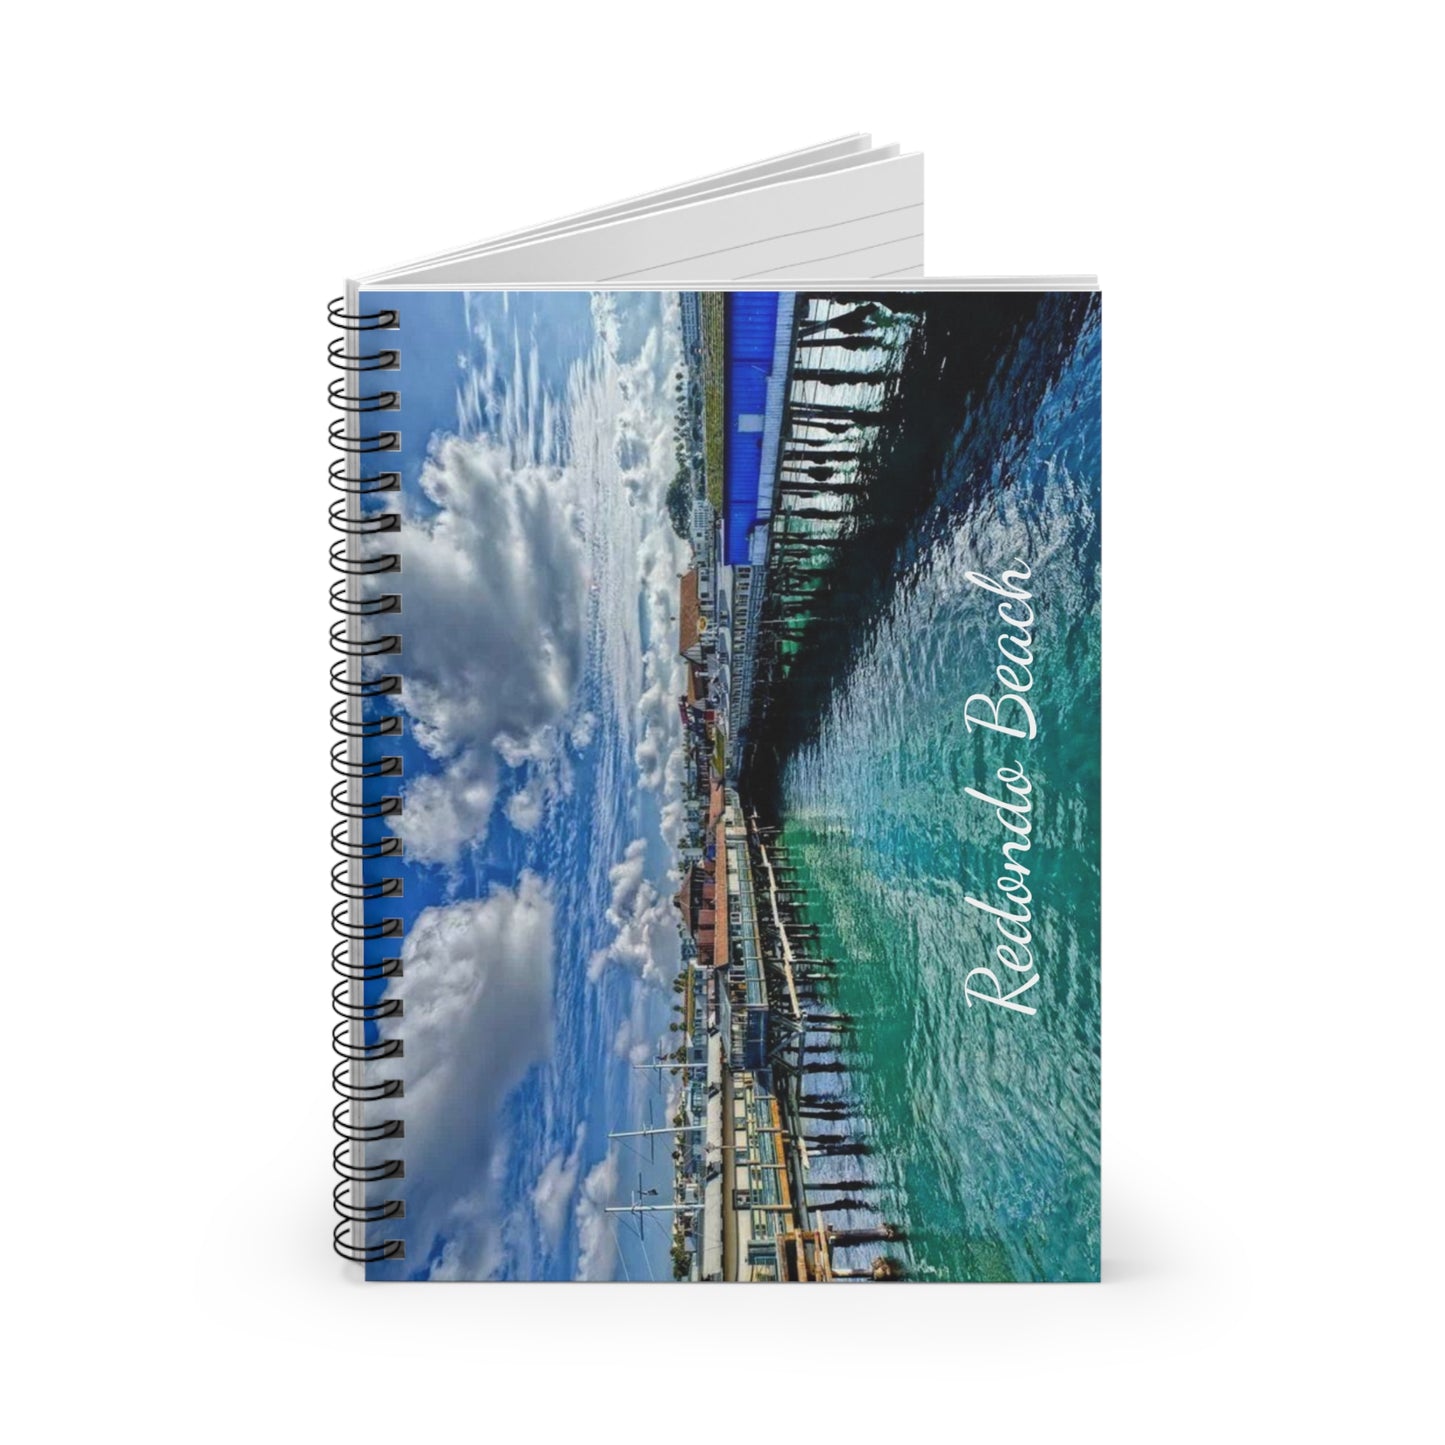 Redondo Beach California - Spiral Notebook - Ruled Line